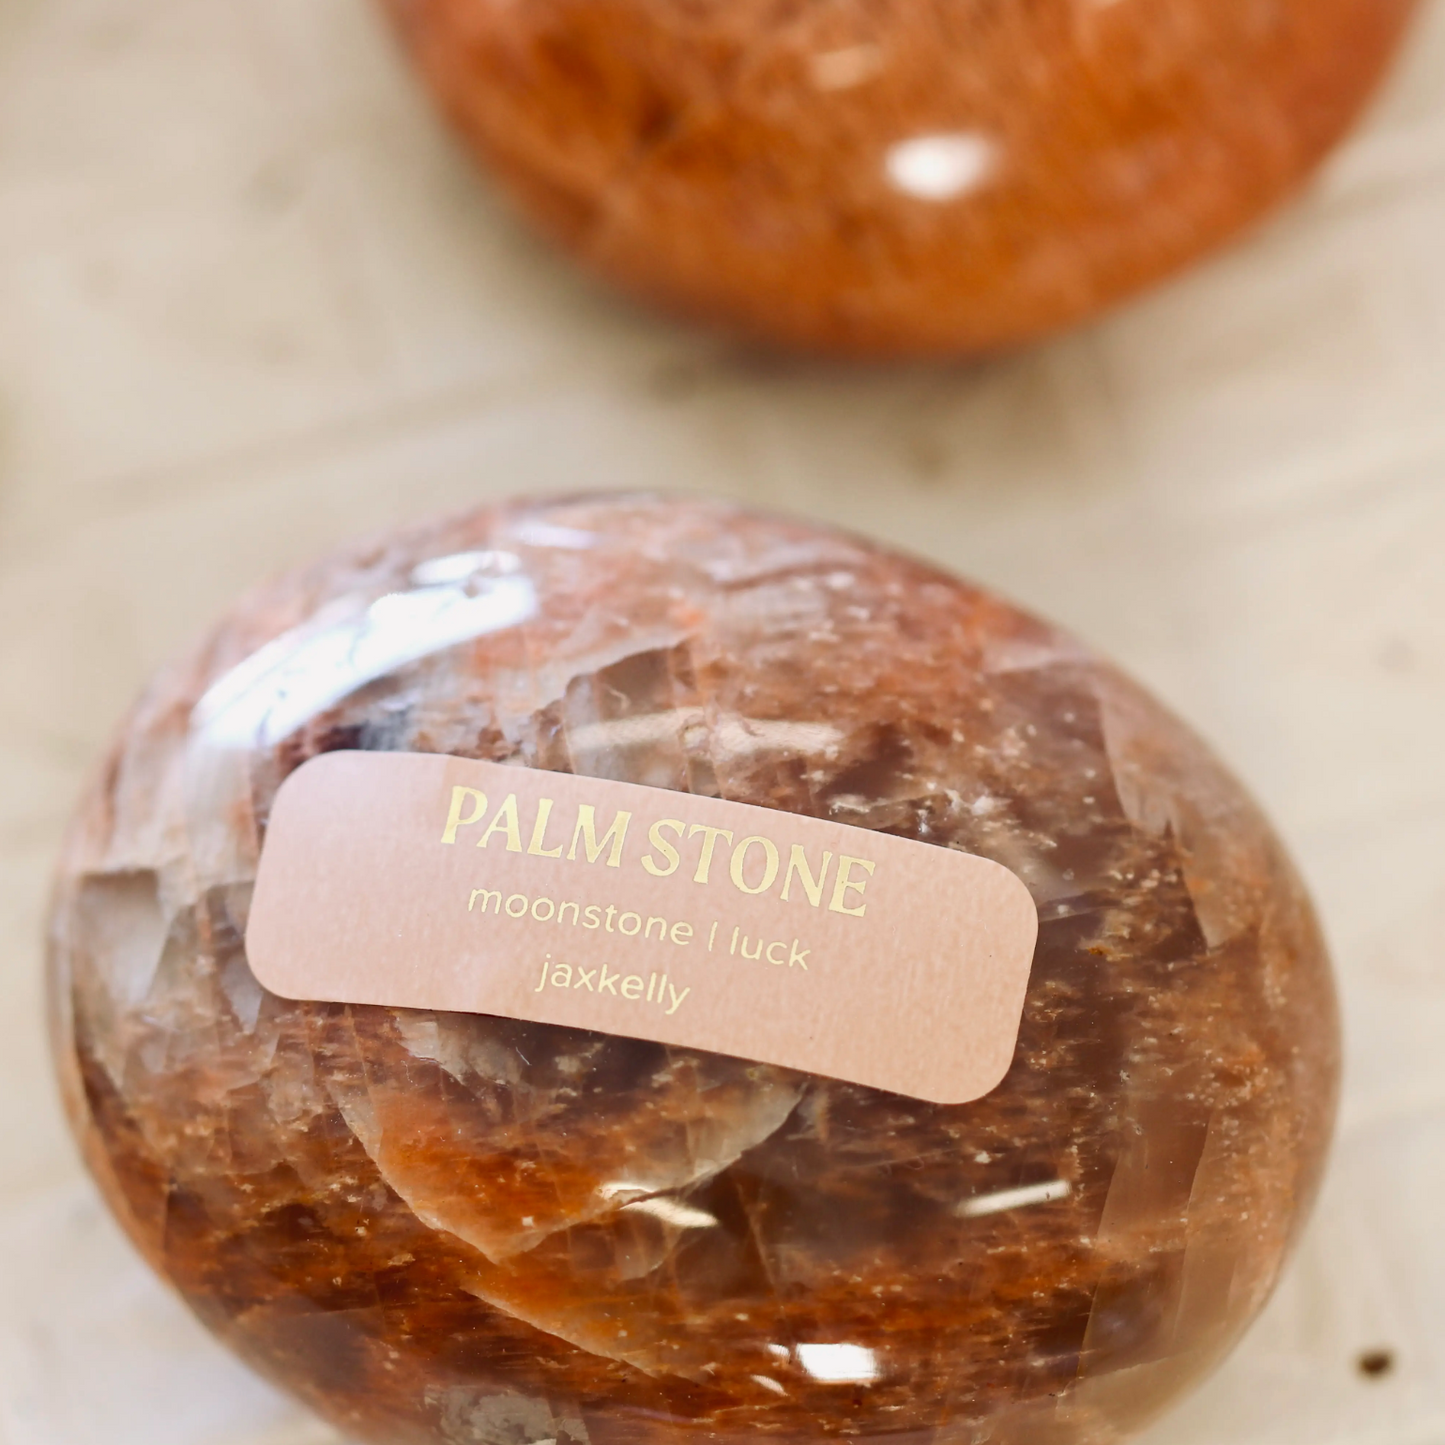 Moonstone Palm Stone - Luck